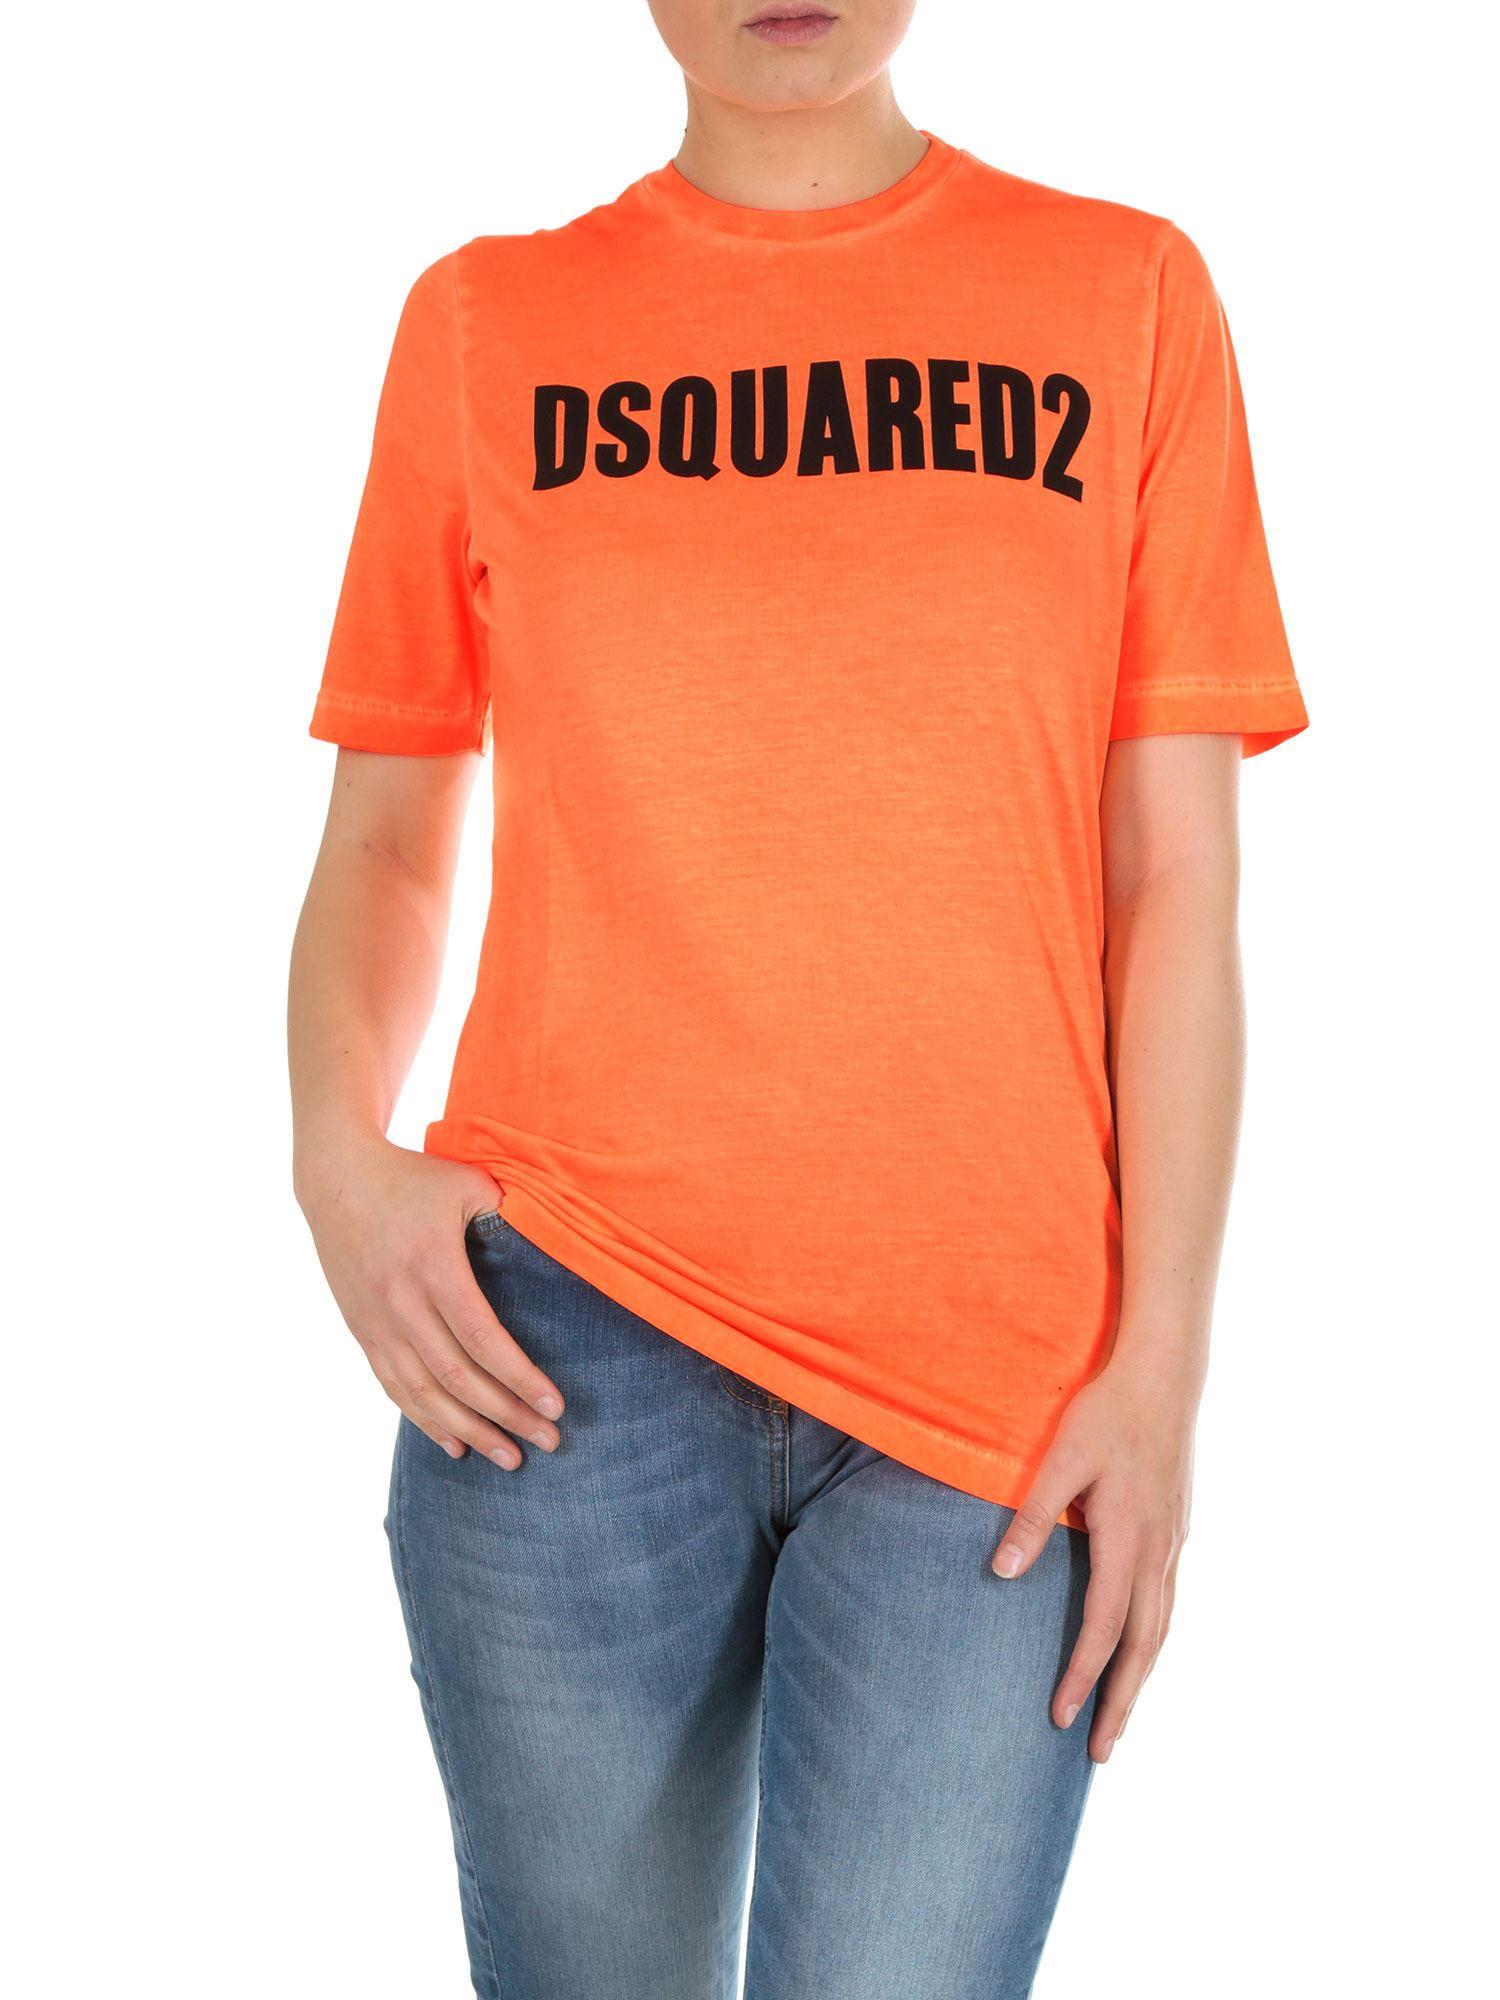 tee shirt dsquared orange